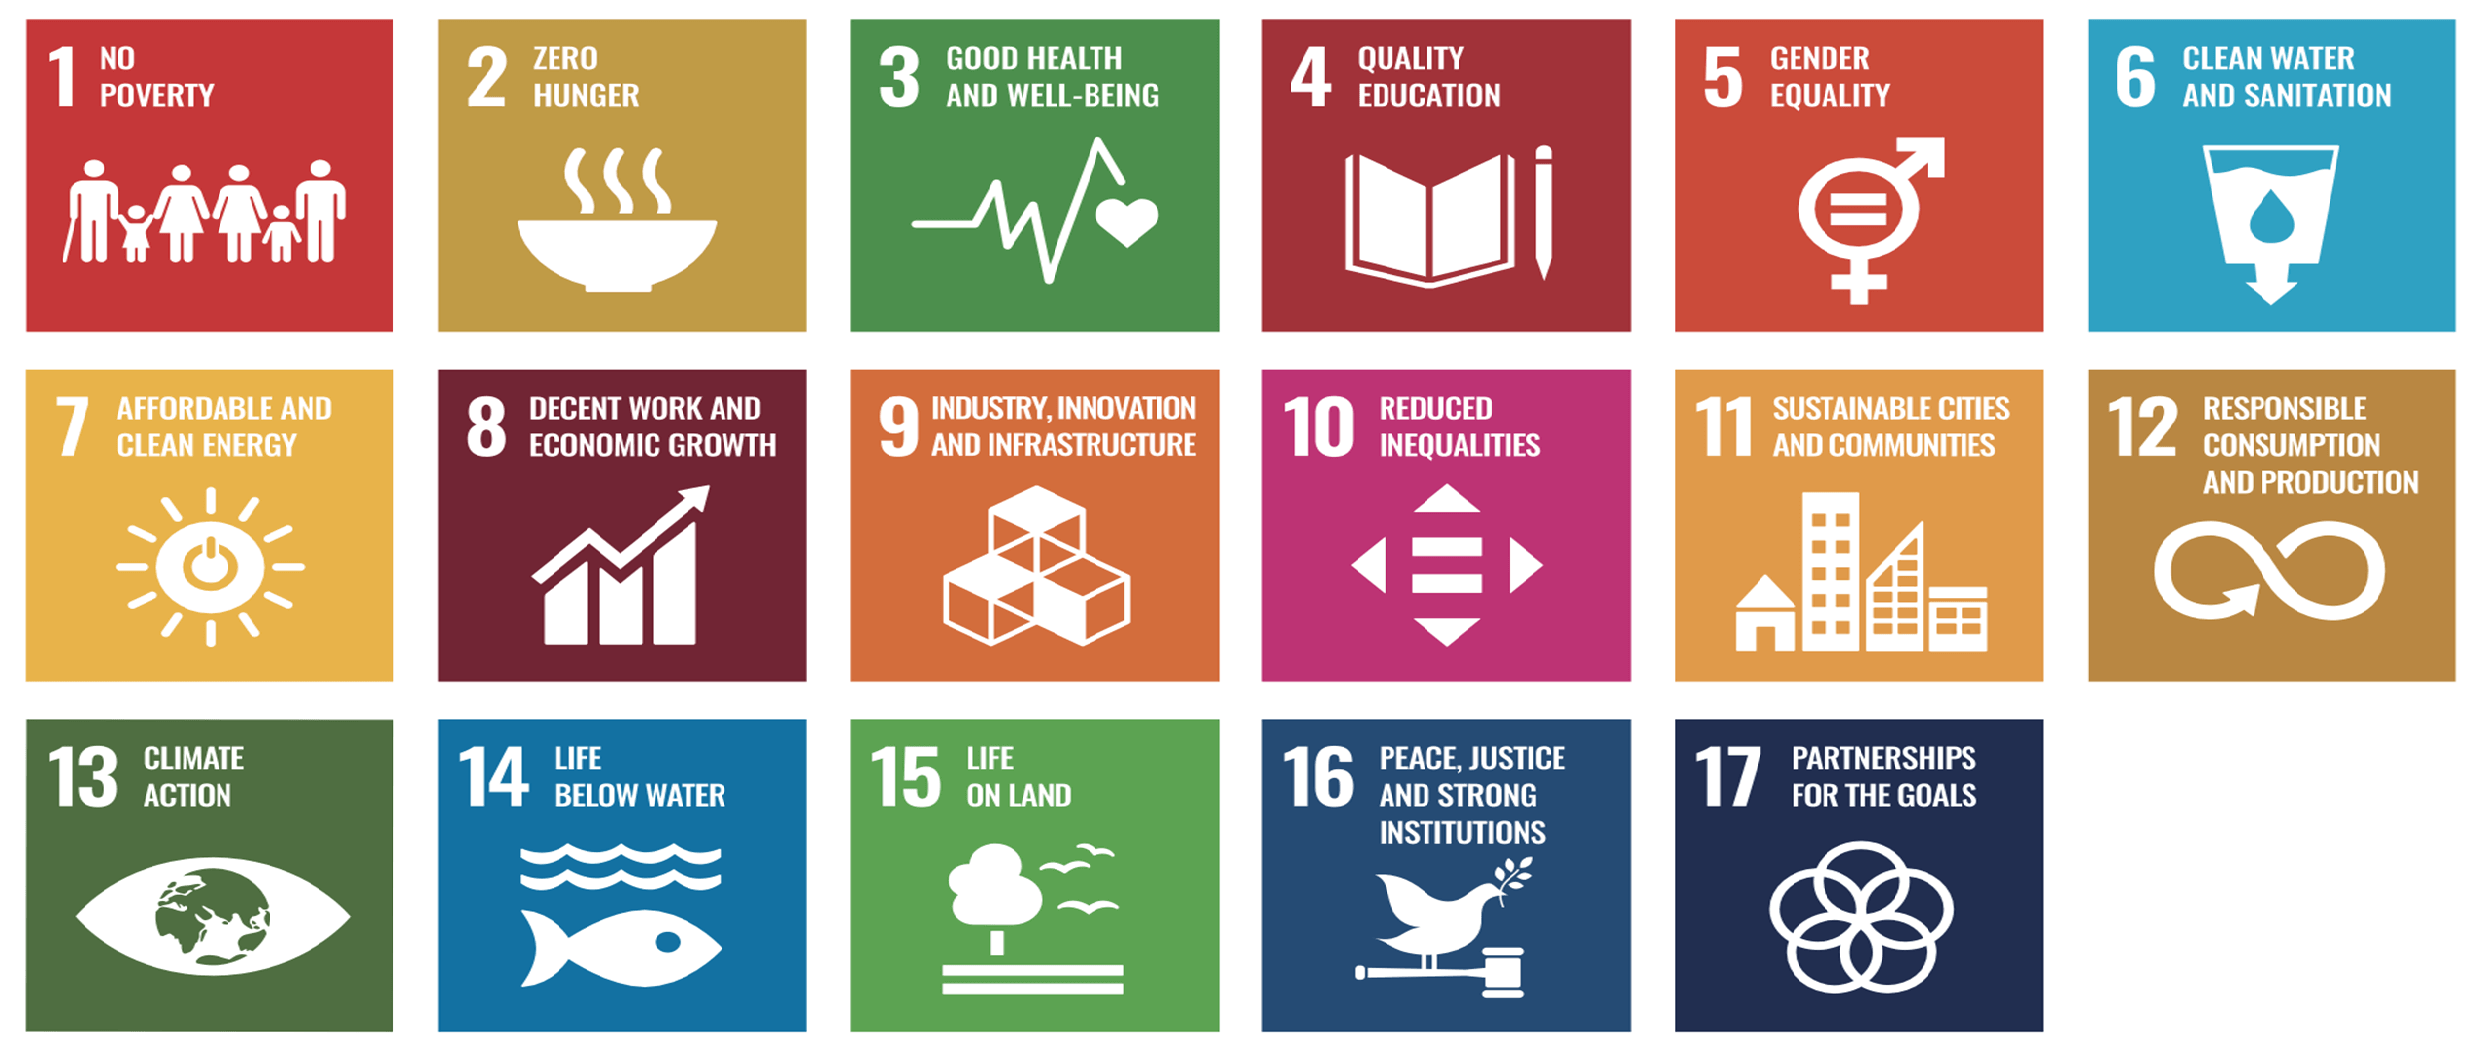 SDGs 聯合國永續發展目標